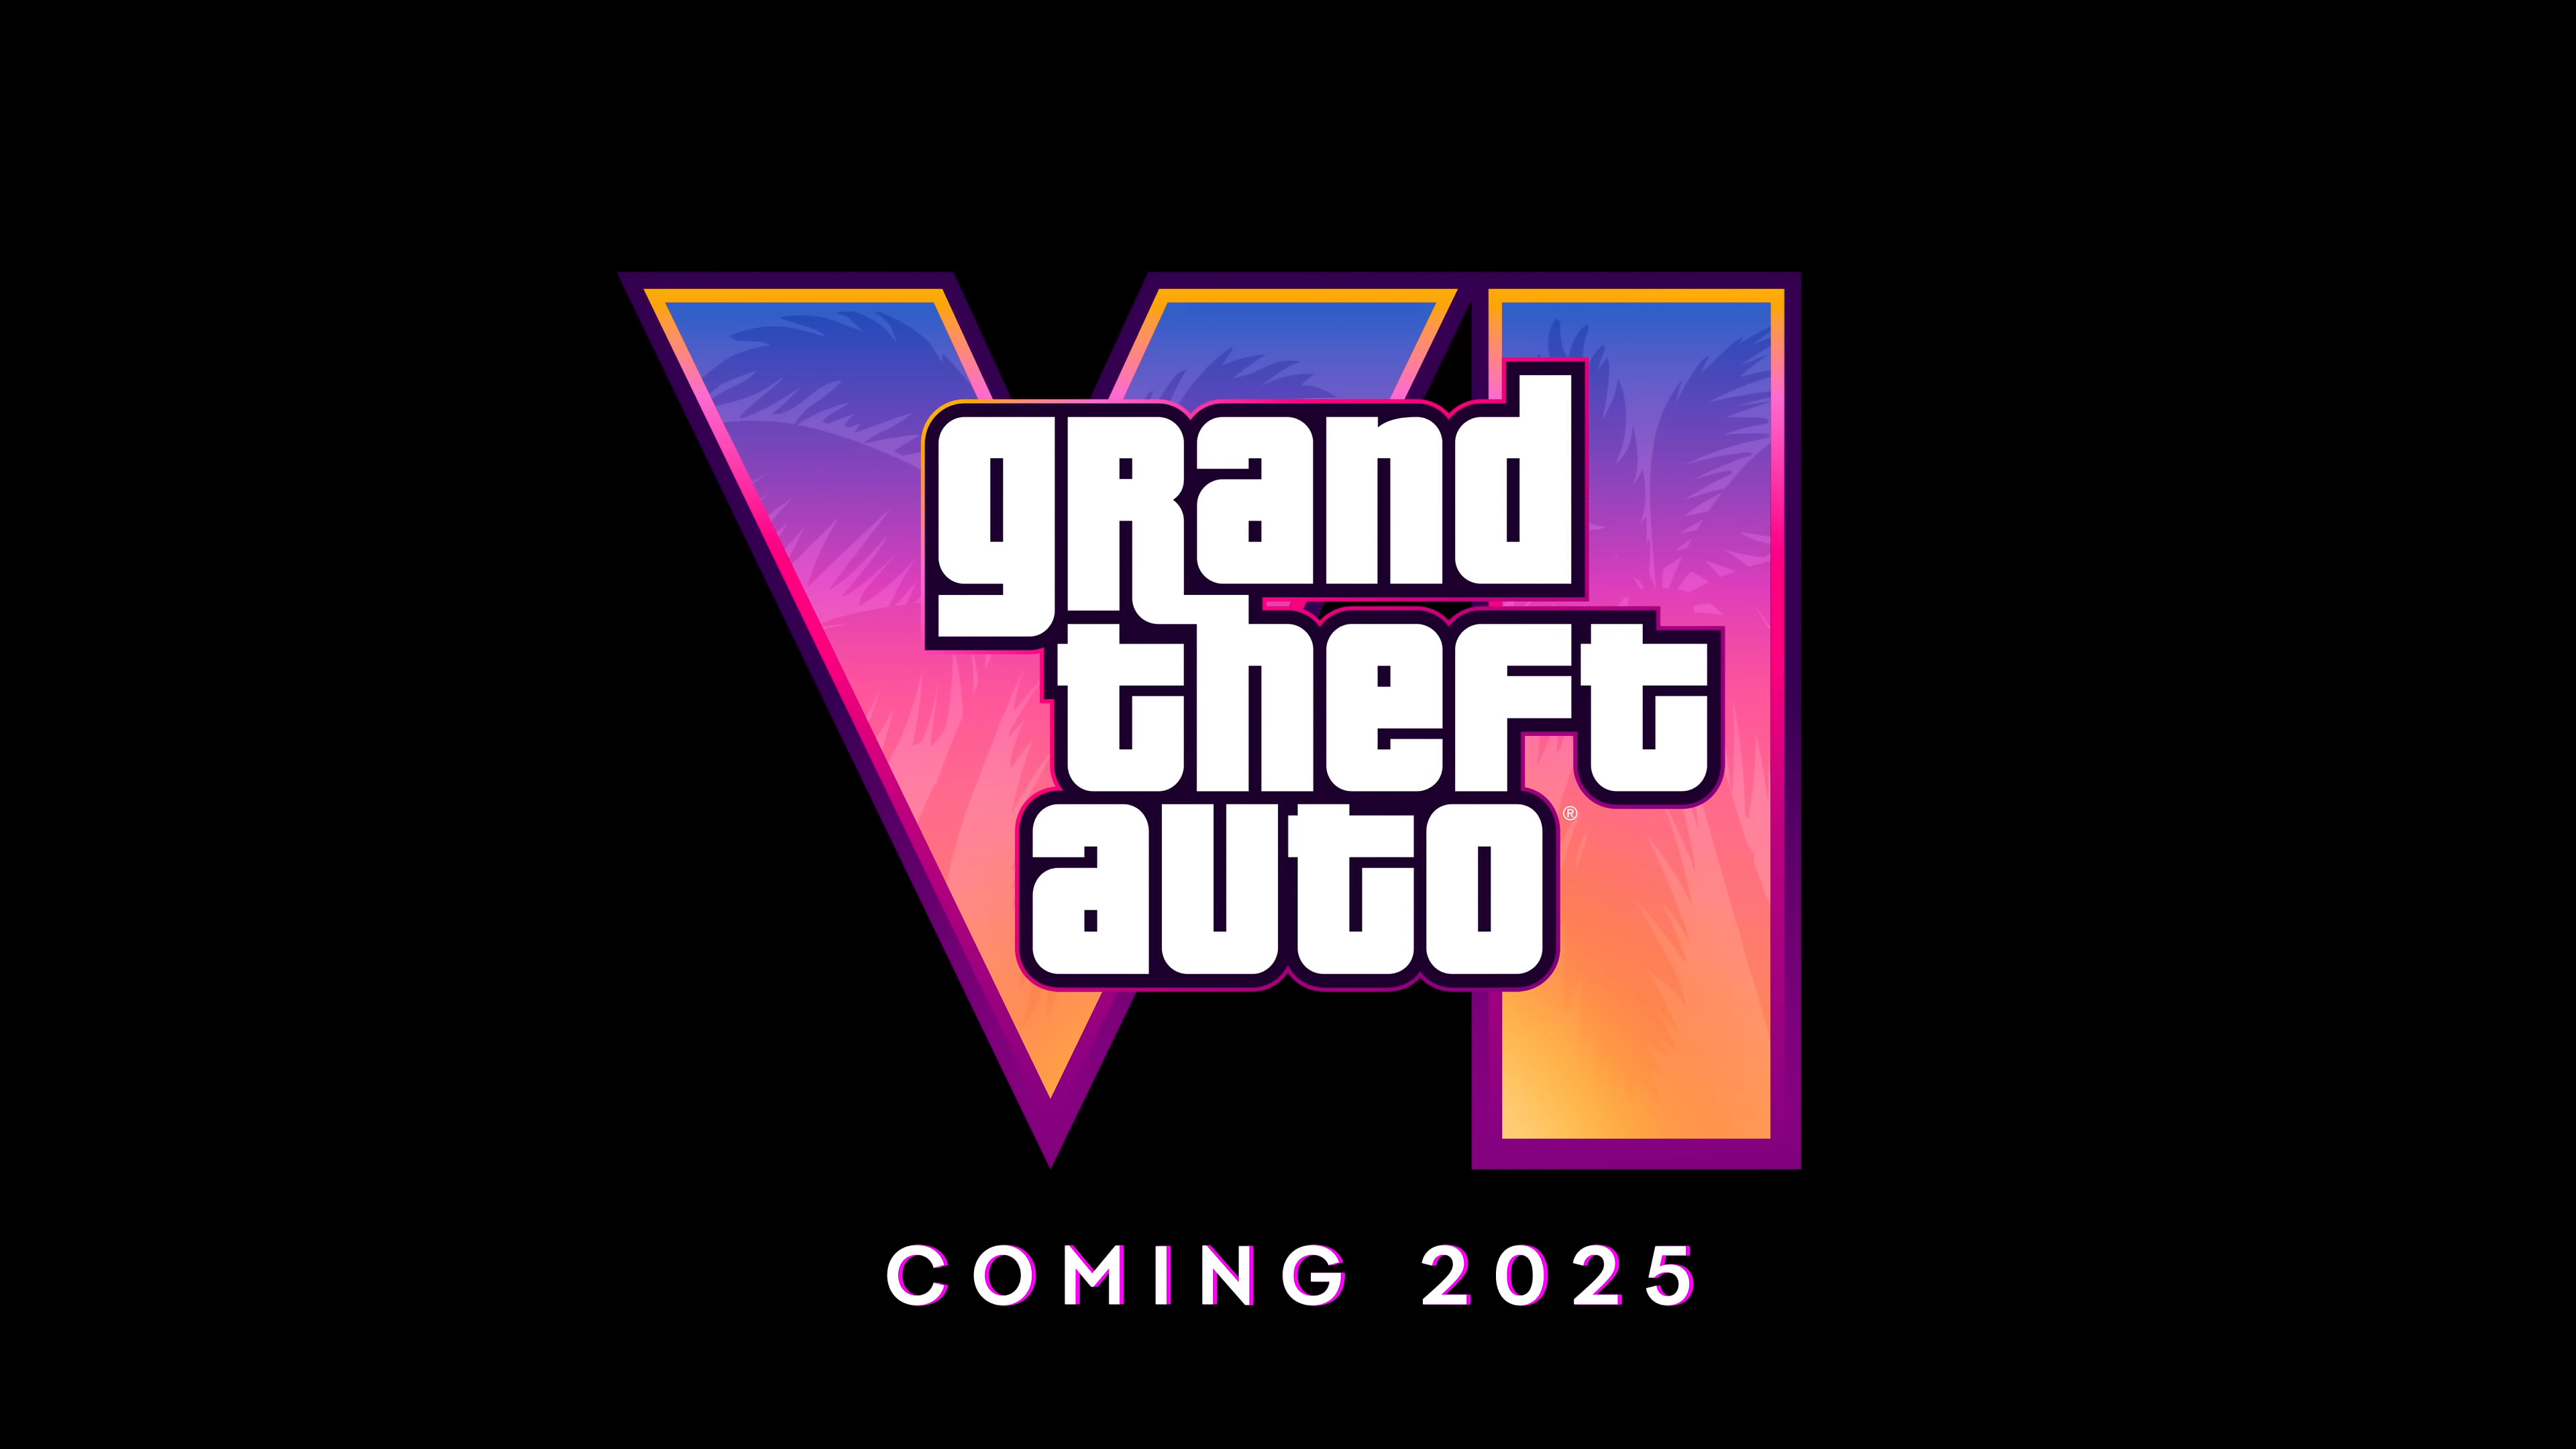 「GTA VI」は2025年秋発売予定 - PC Watch